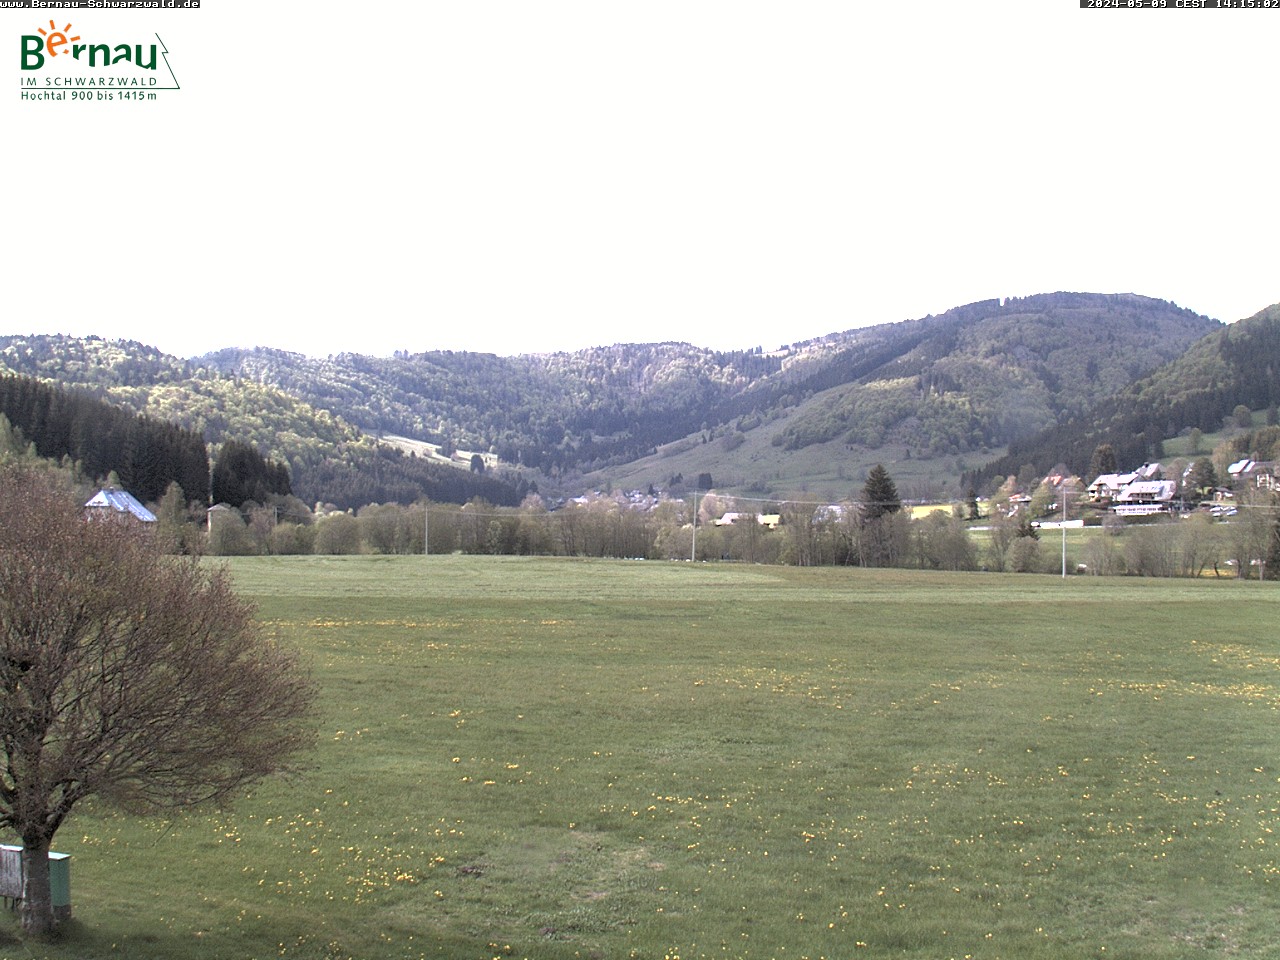 Webcam Bernau im Schwarzwald